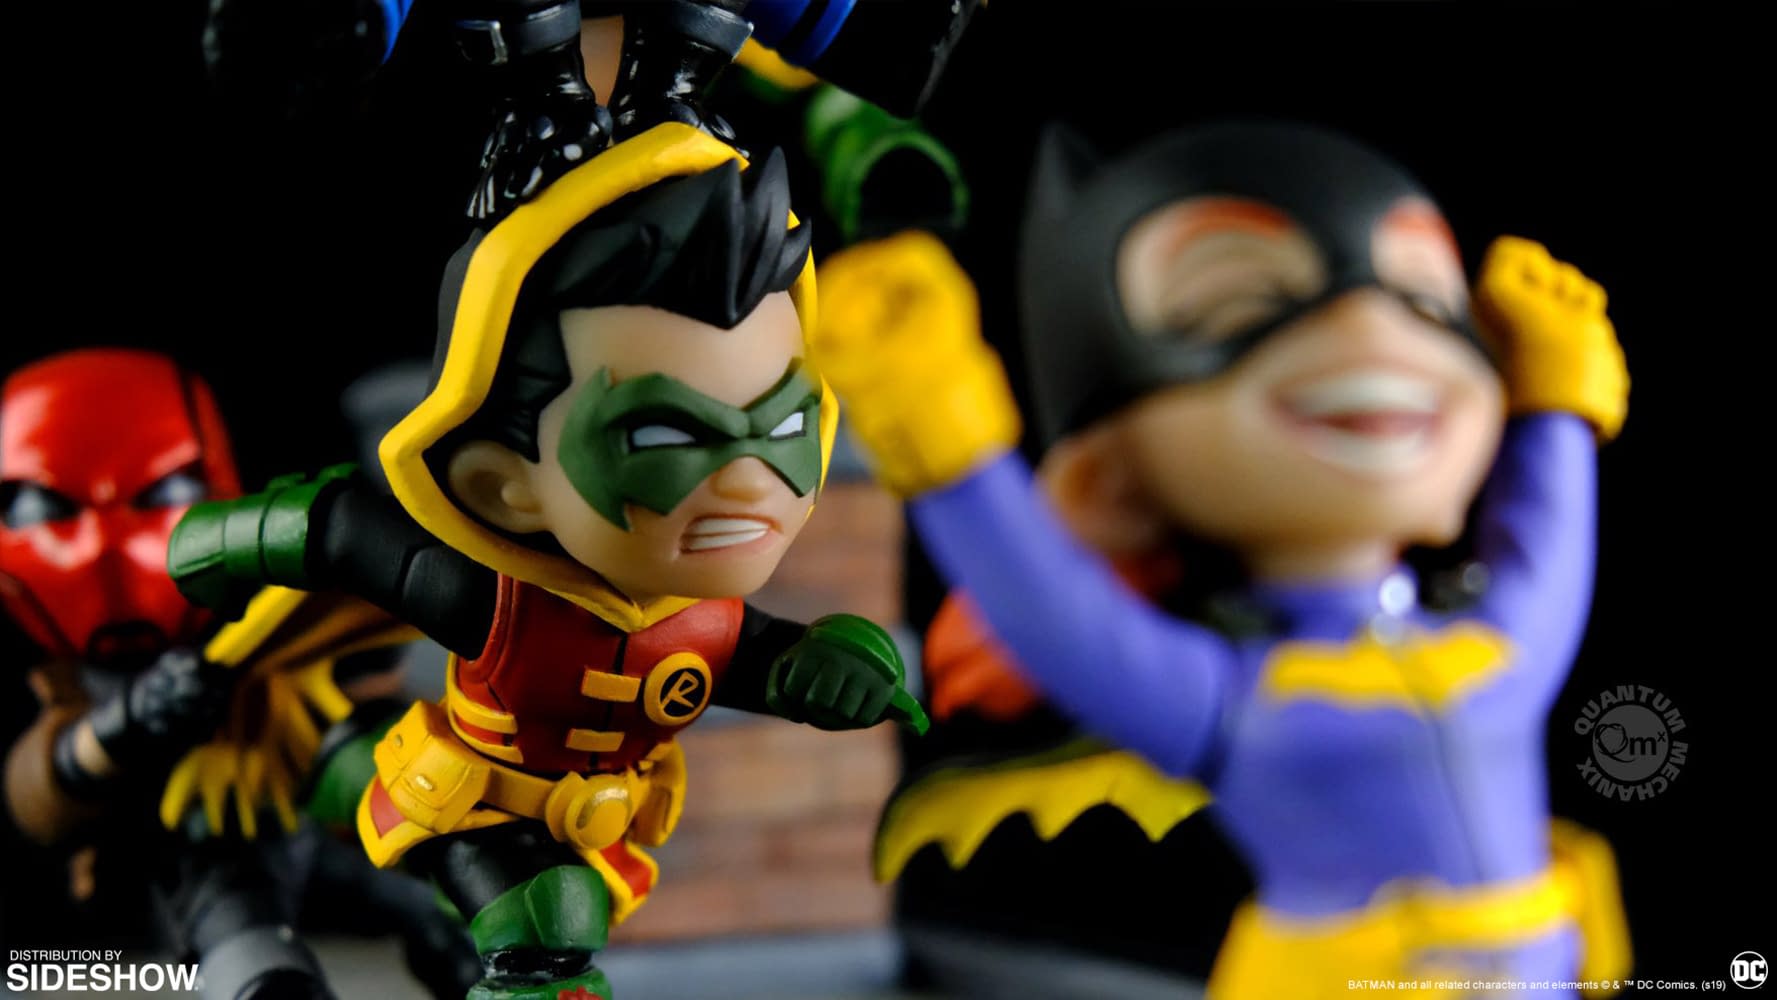 Batman's Sidekicks Team-Up for Adorable Q-Master Statue